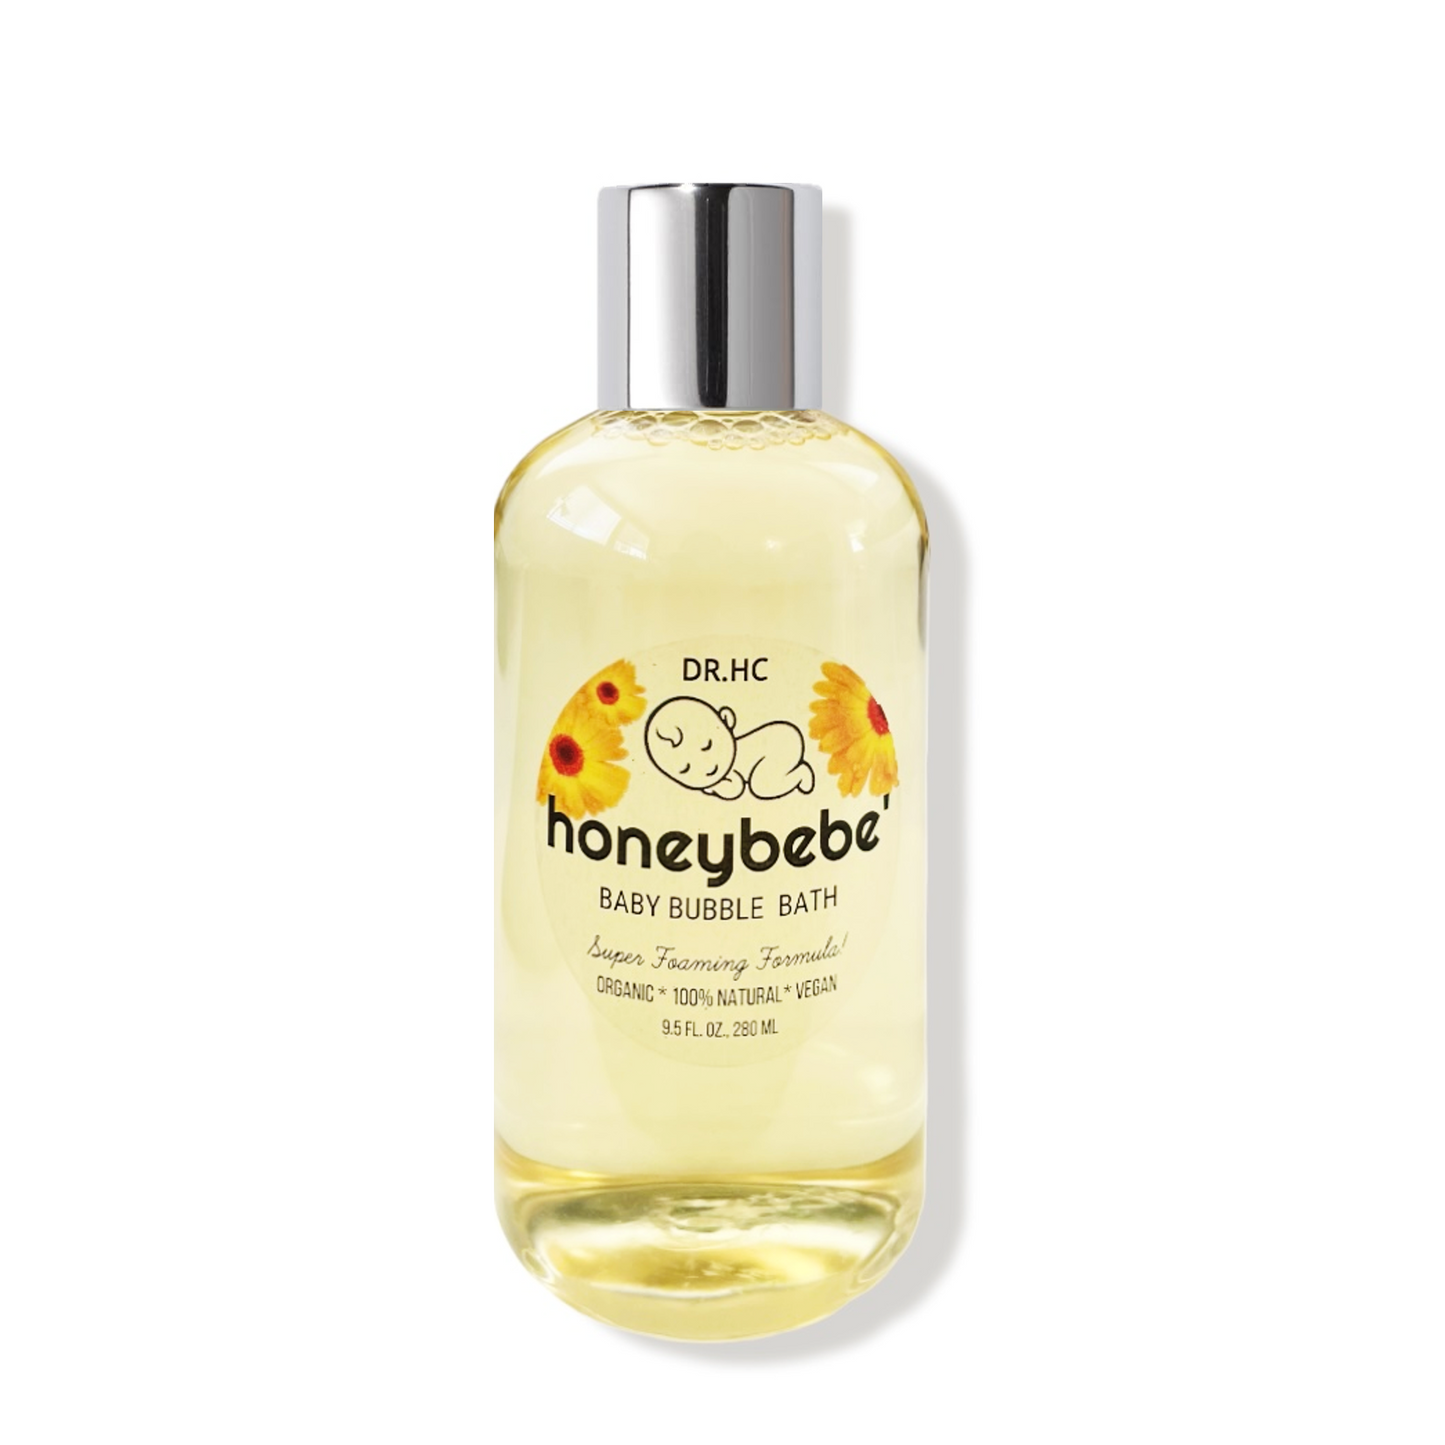 DR.HC Honeybebe' Baby Bubble Bath (Refreshing Patchouli) - For Baby & Mommy (9.5 fl.oz., 280 ml)-7